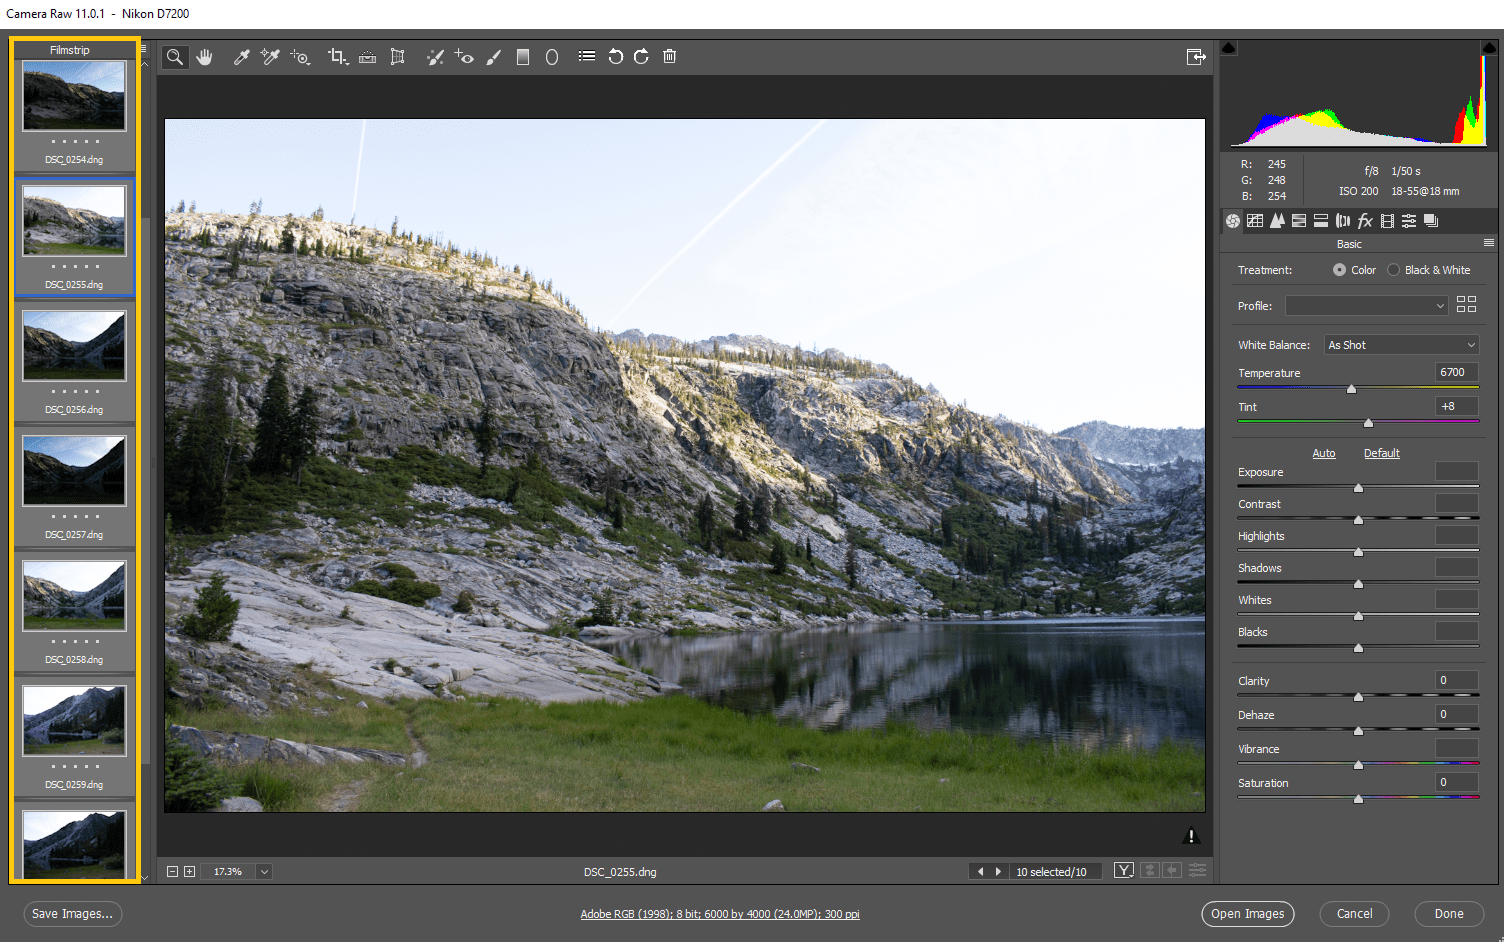 Adobe Photoshop 7 0 Apk Download For Windows 10